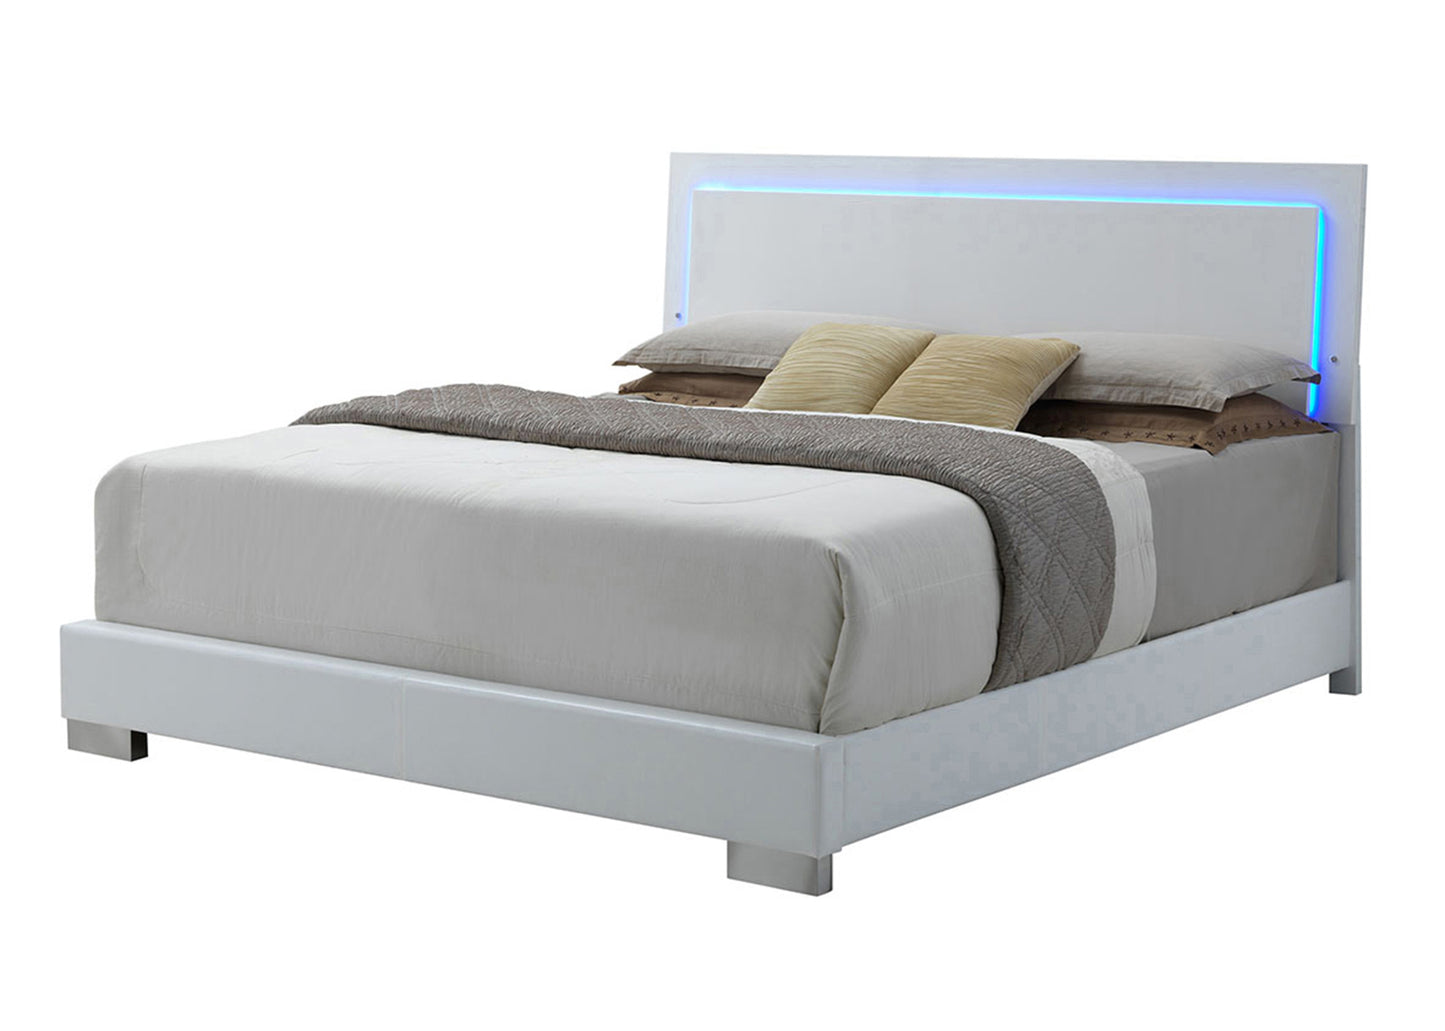 Felicity Bedroom Set With LED Light Headboard Glossy White - 203500